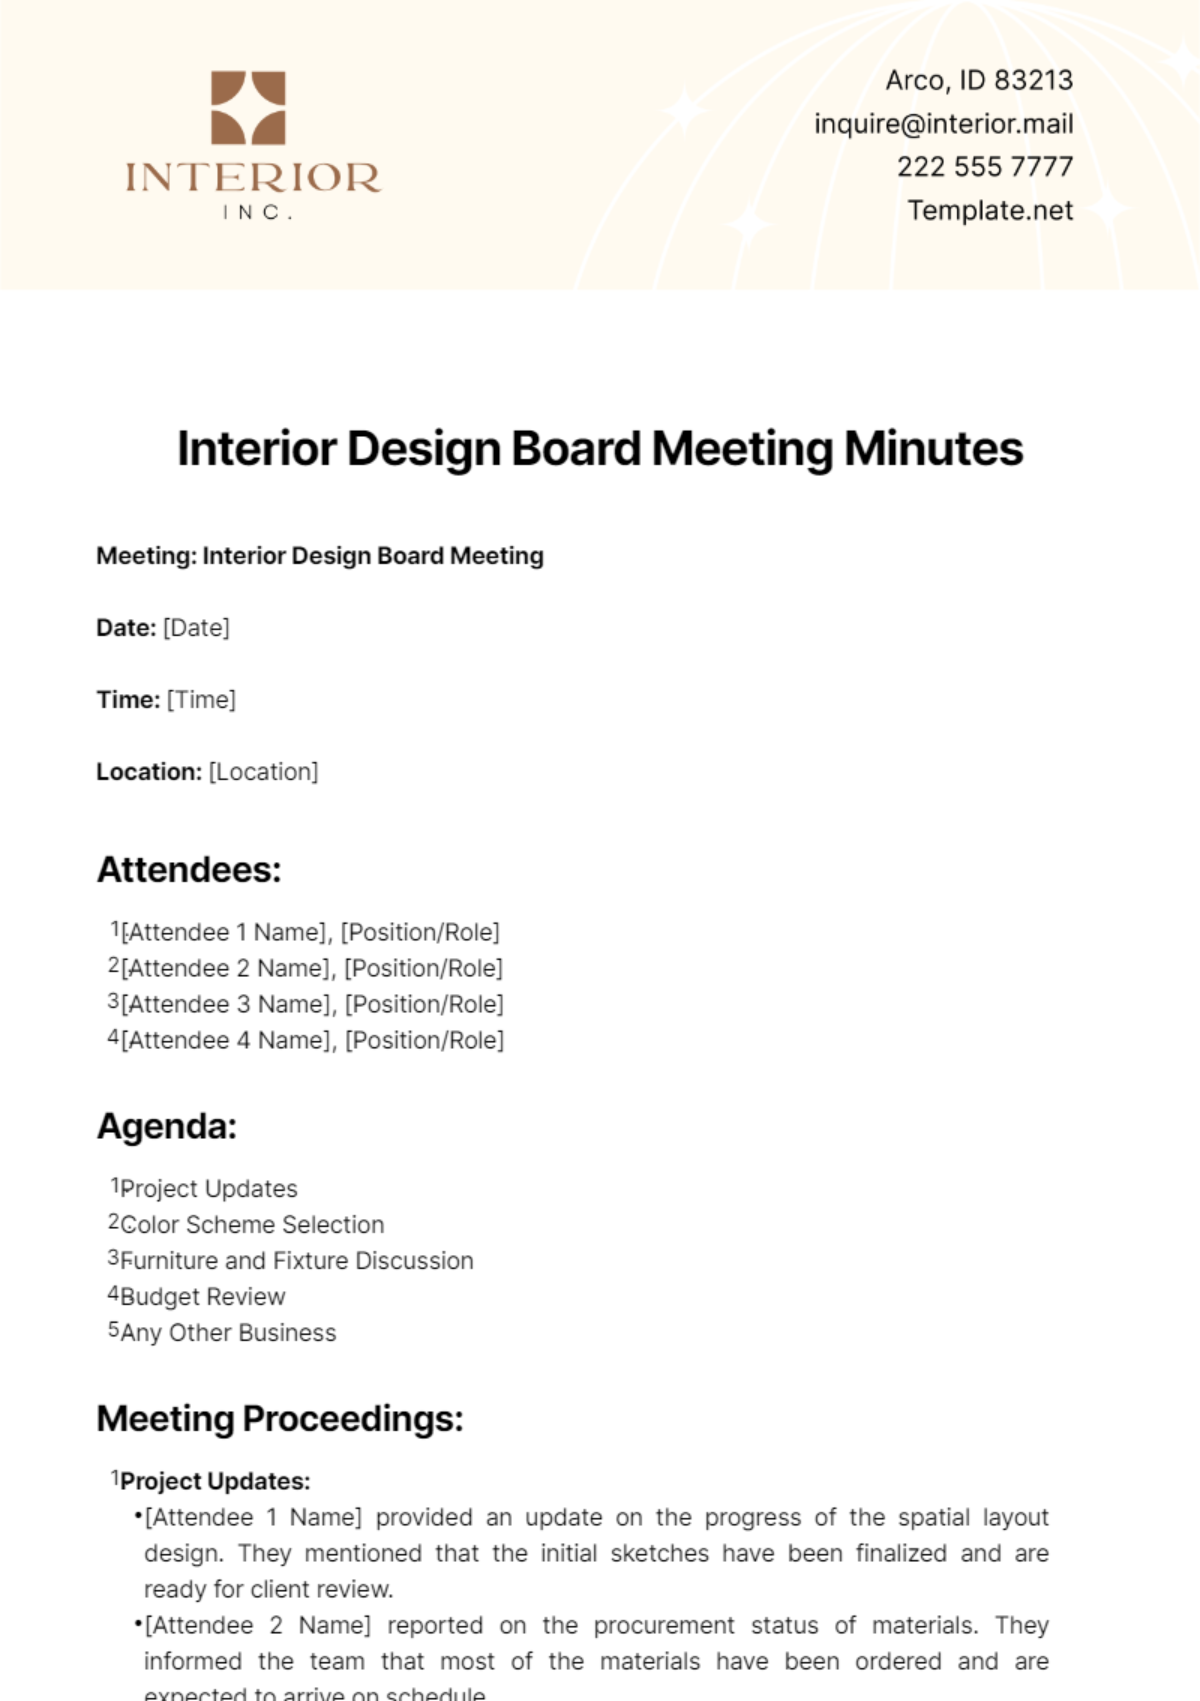 Interior Design Board Meeting Minutes Template